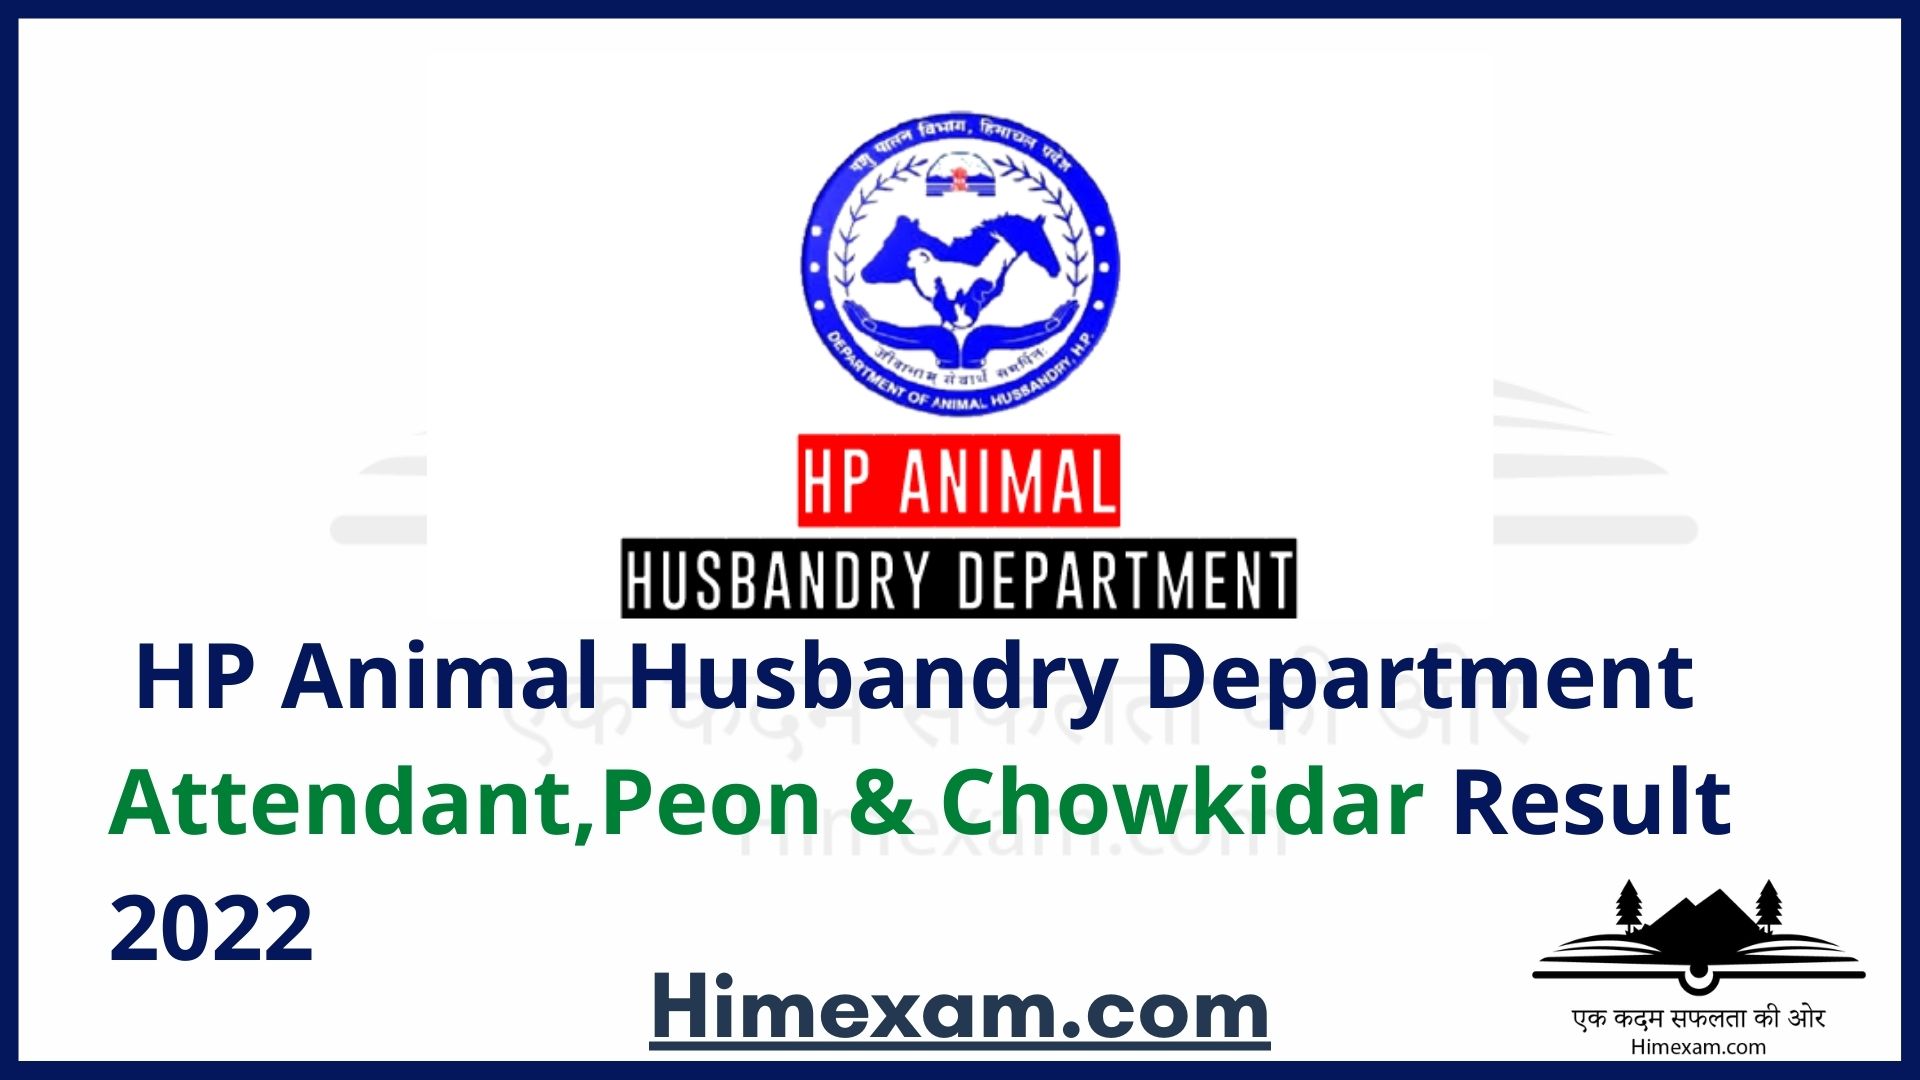 HP Animal Husbandry Department Attendant,Peon & Chowkidar Result 2022